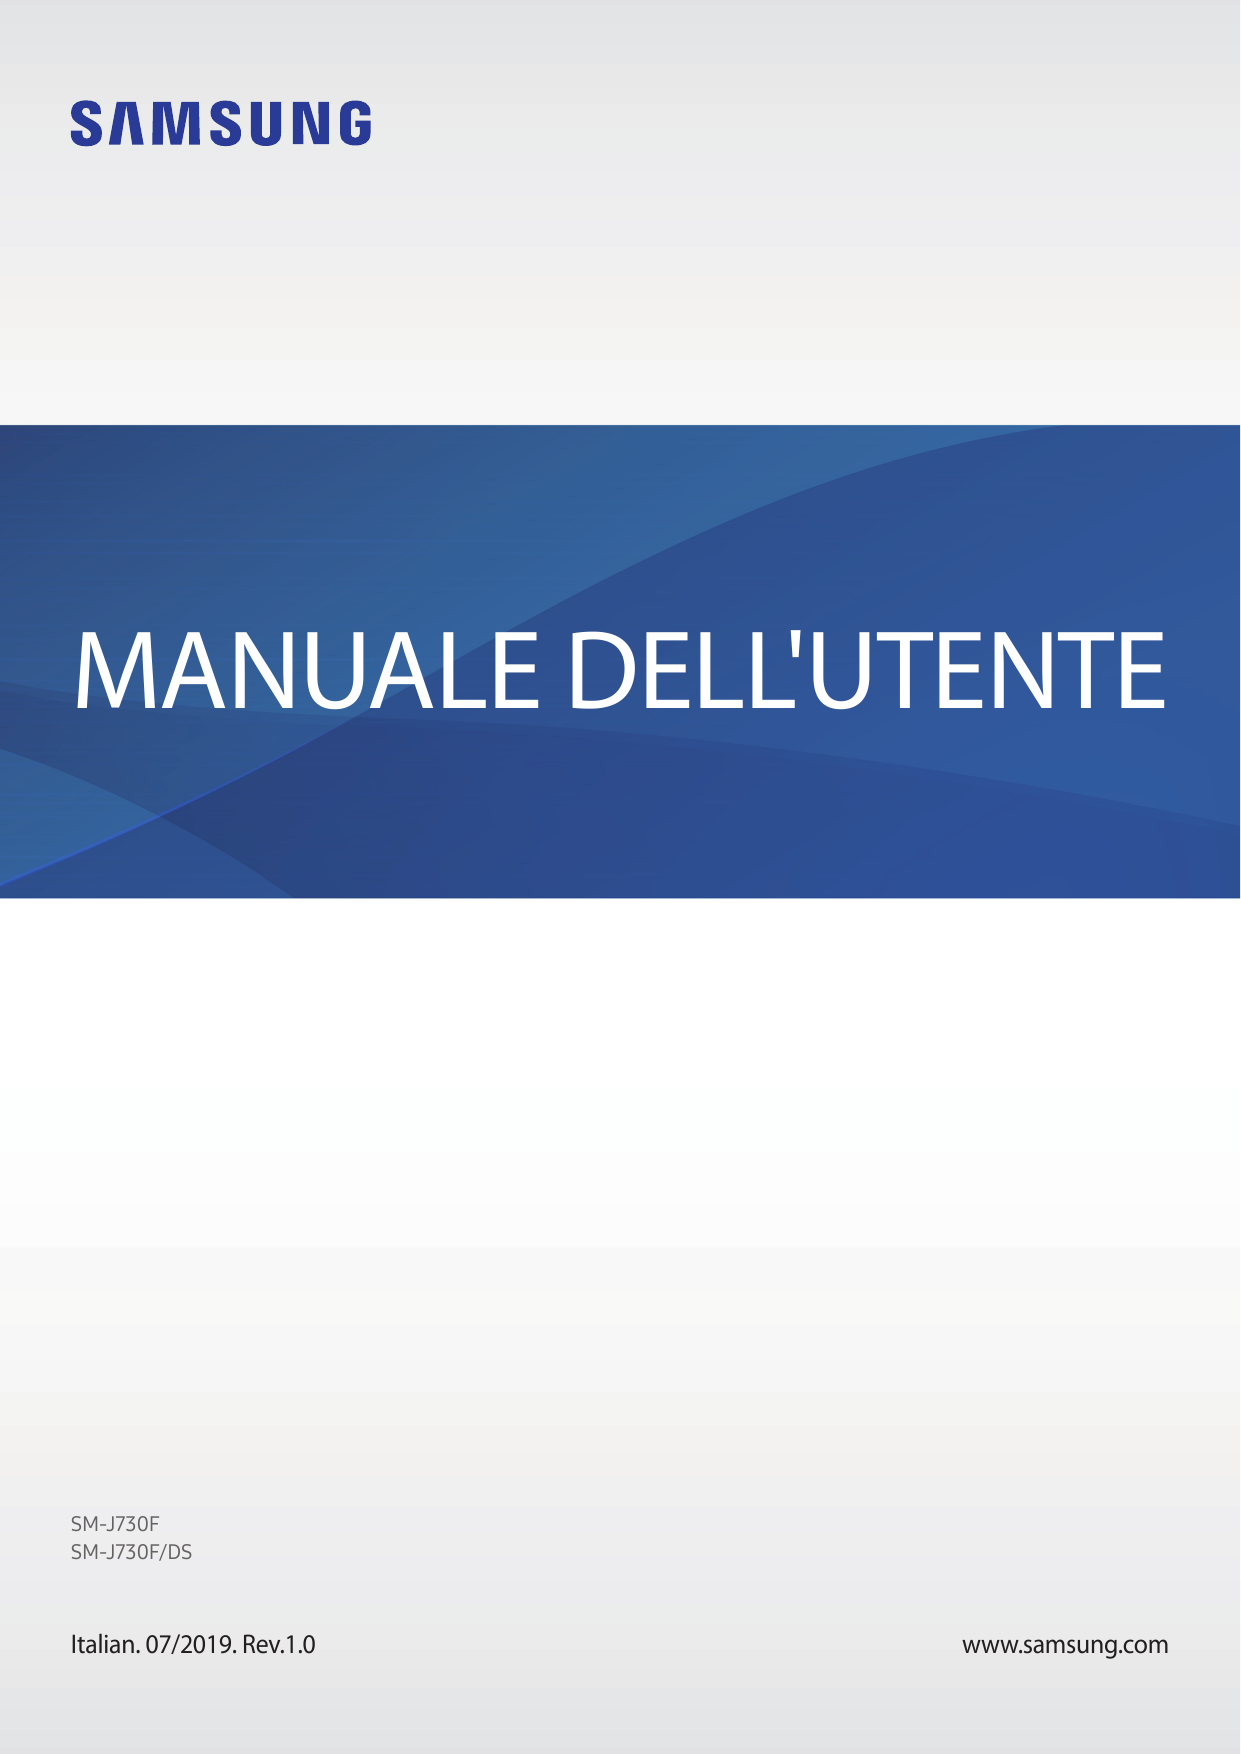 MANUALE DELL'UTENTESM-J730FSM-J730F/DSItalian. 07/2019. Rev.1.0www.samsung.com